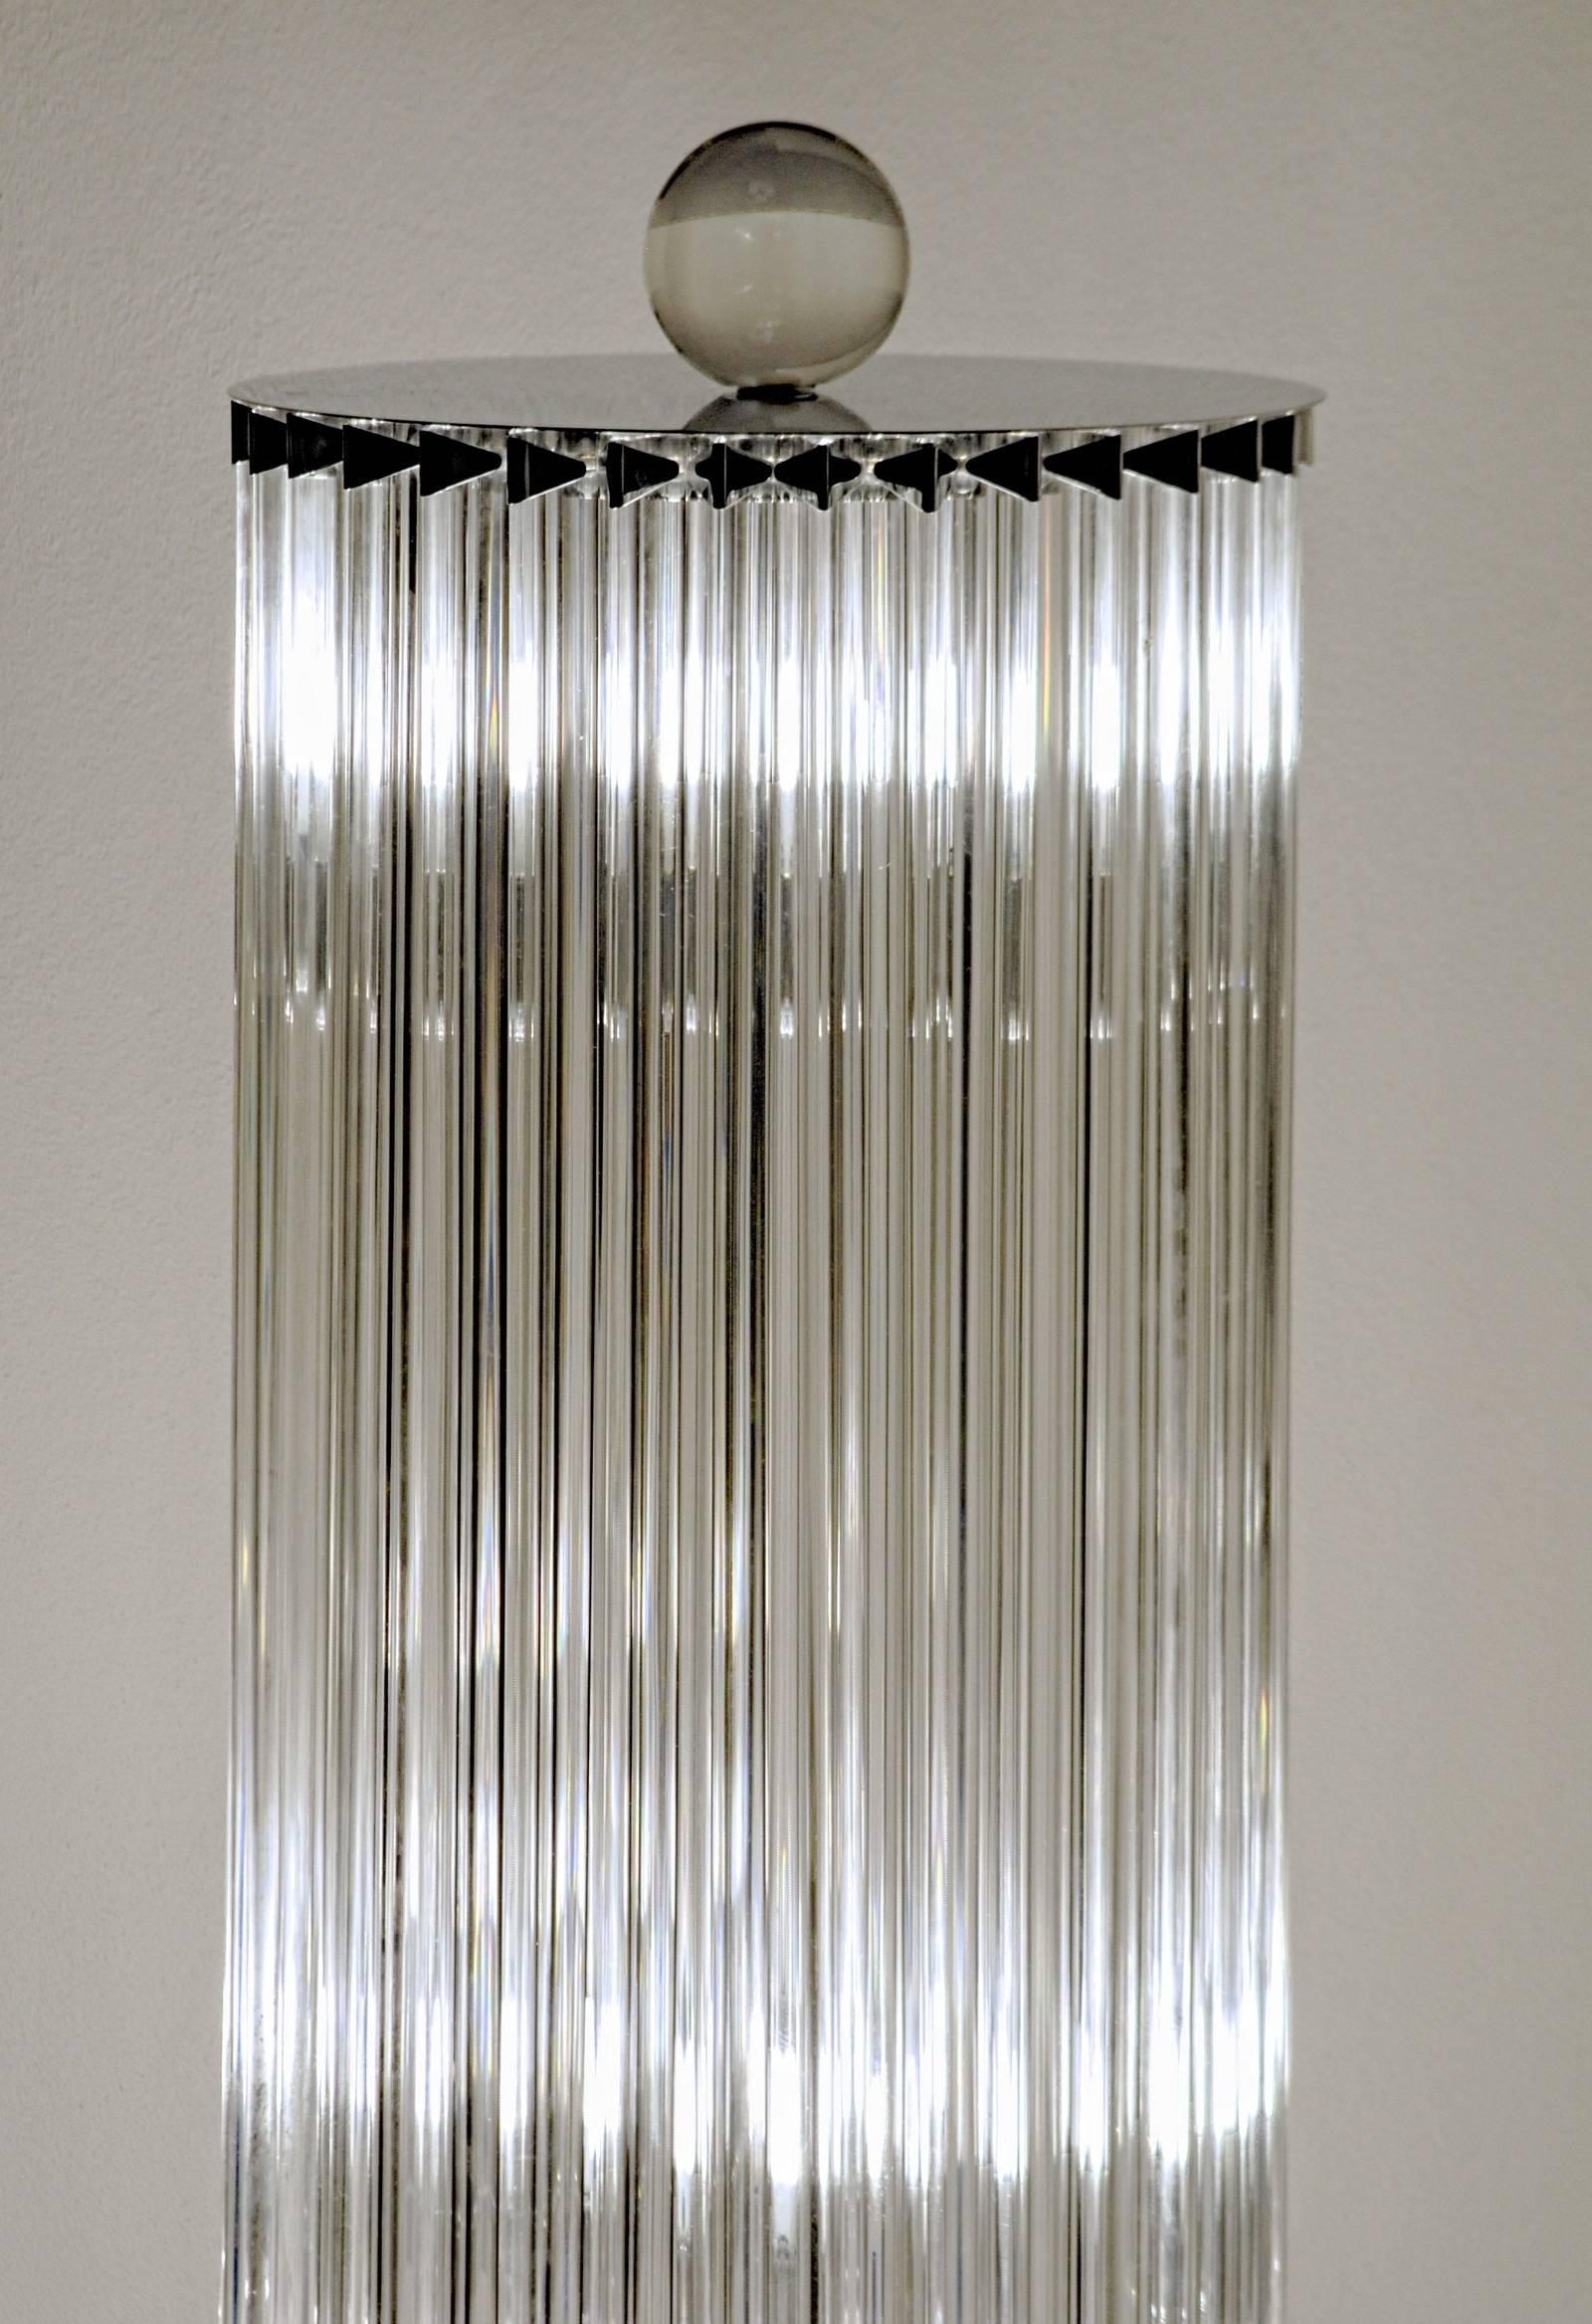 Murano Glass Floor Lamp, 32 Elements, Deco Style, Murano Made